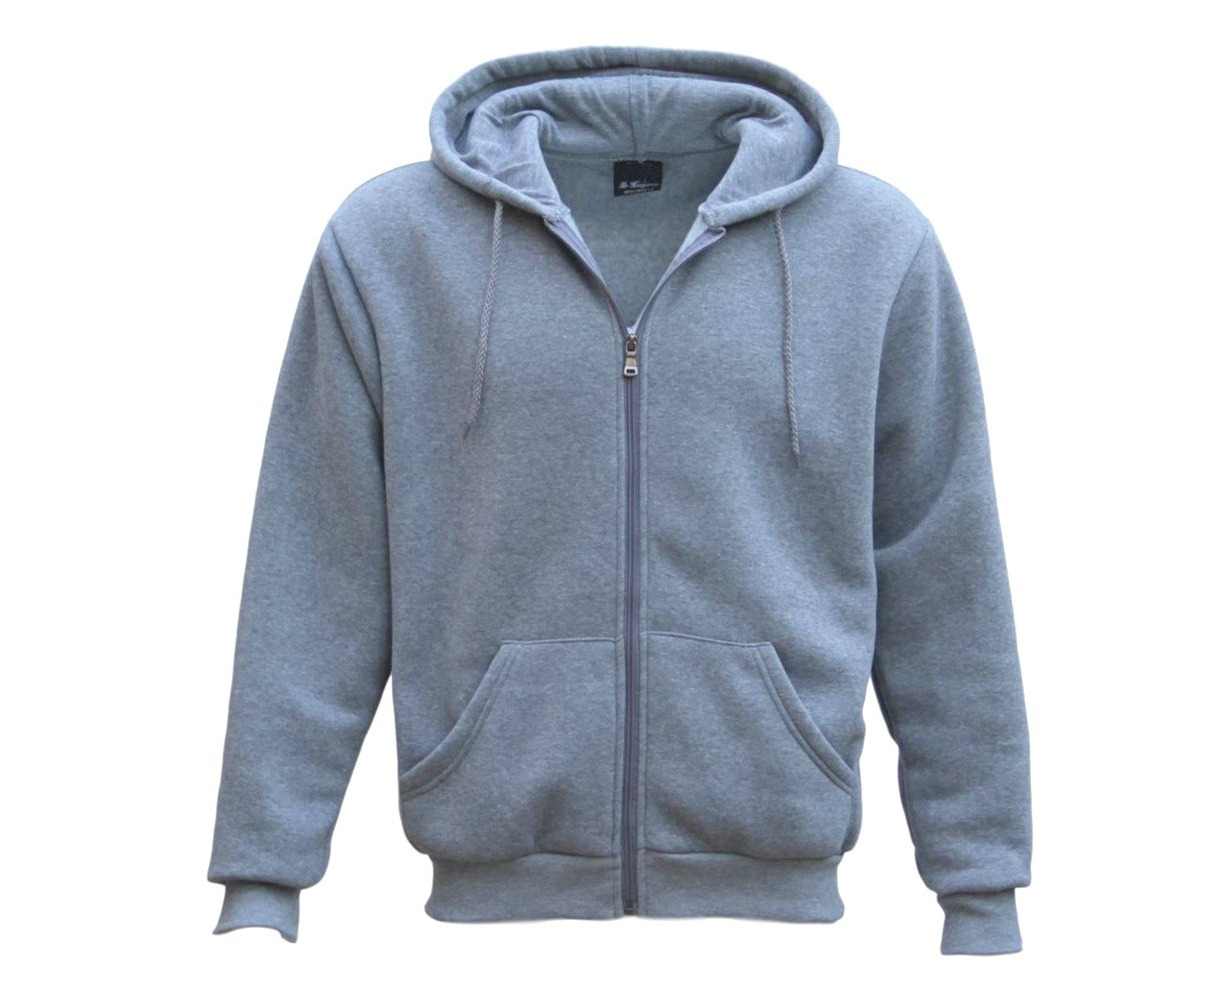 Adult Unisex Men's Plain Basic Pullover Hoodie Sweater Sweatshirt